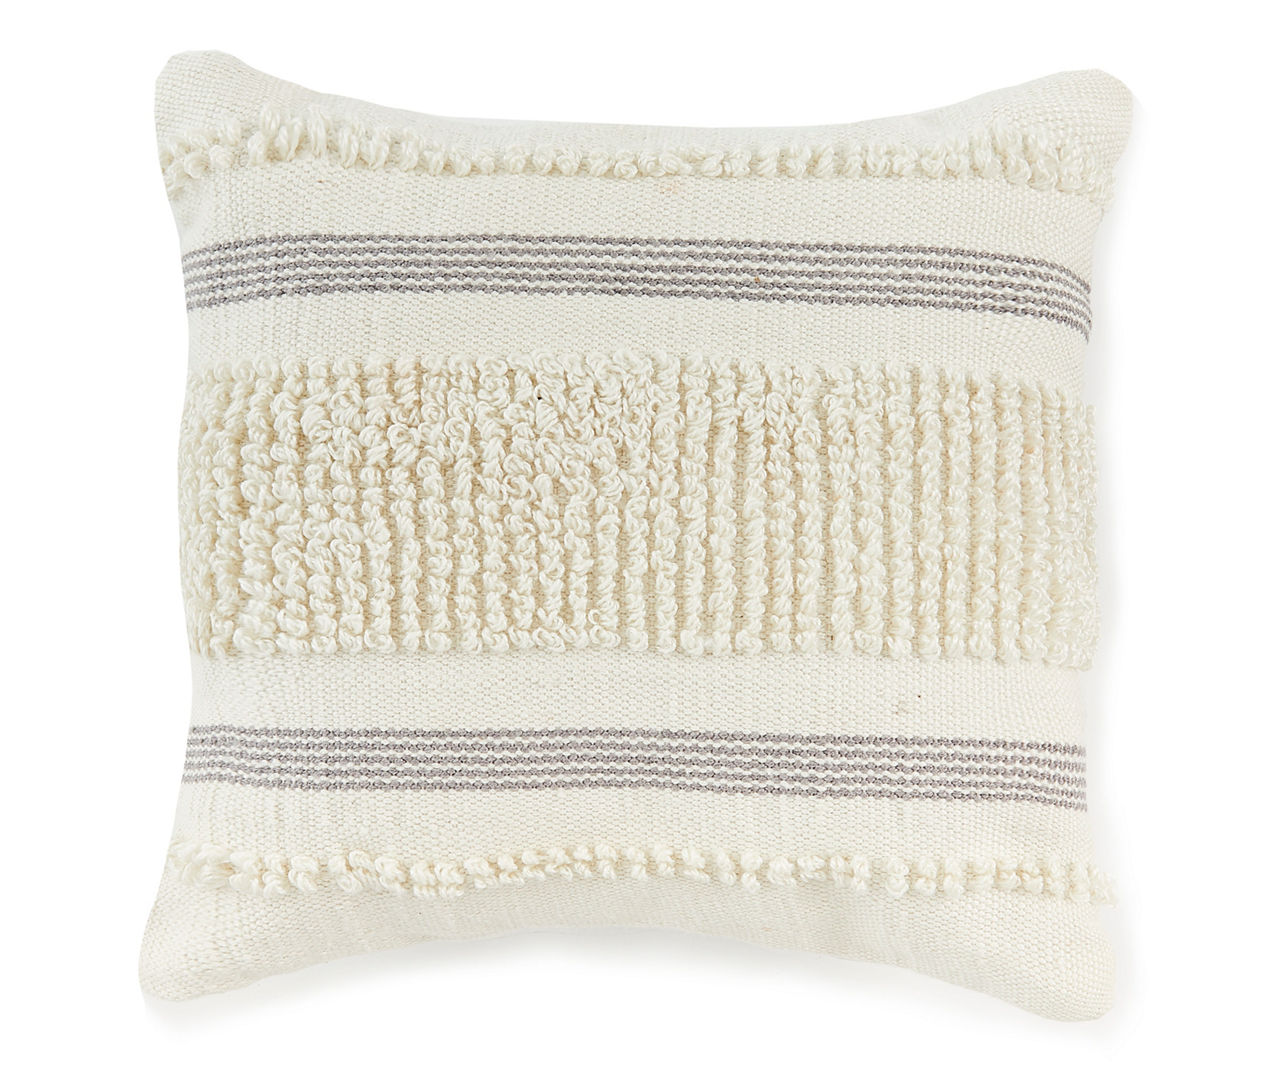 Broyhill - Black Textured Stripe Square Throw Pillow